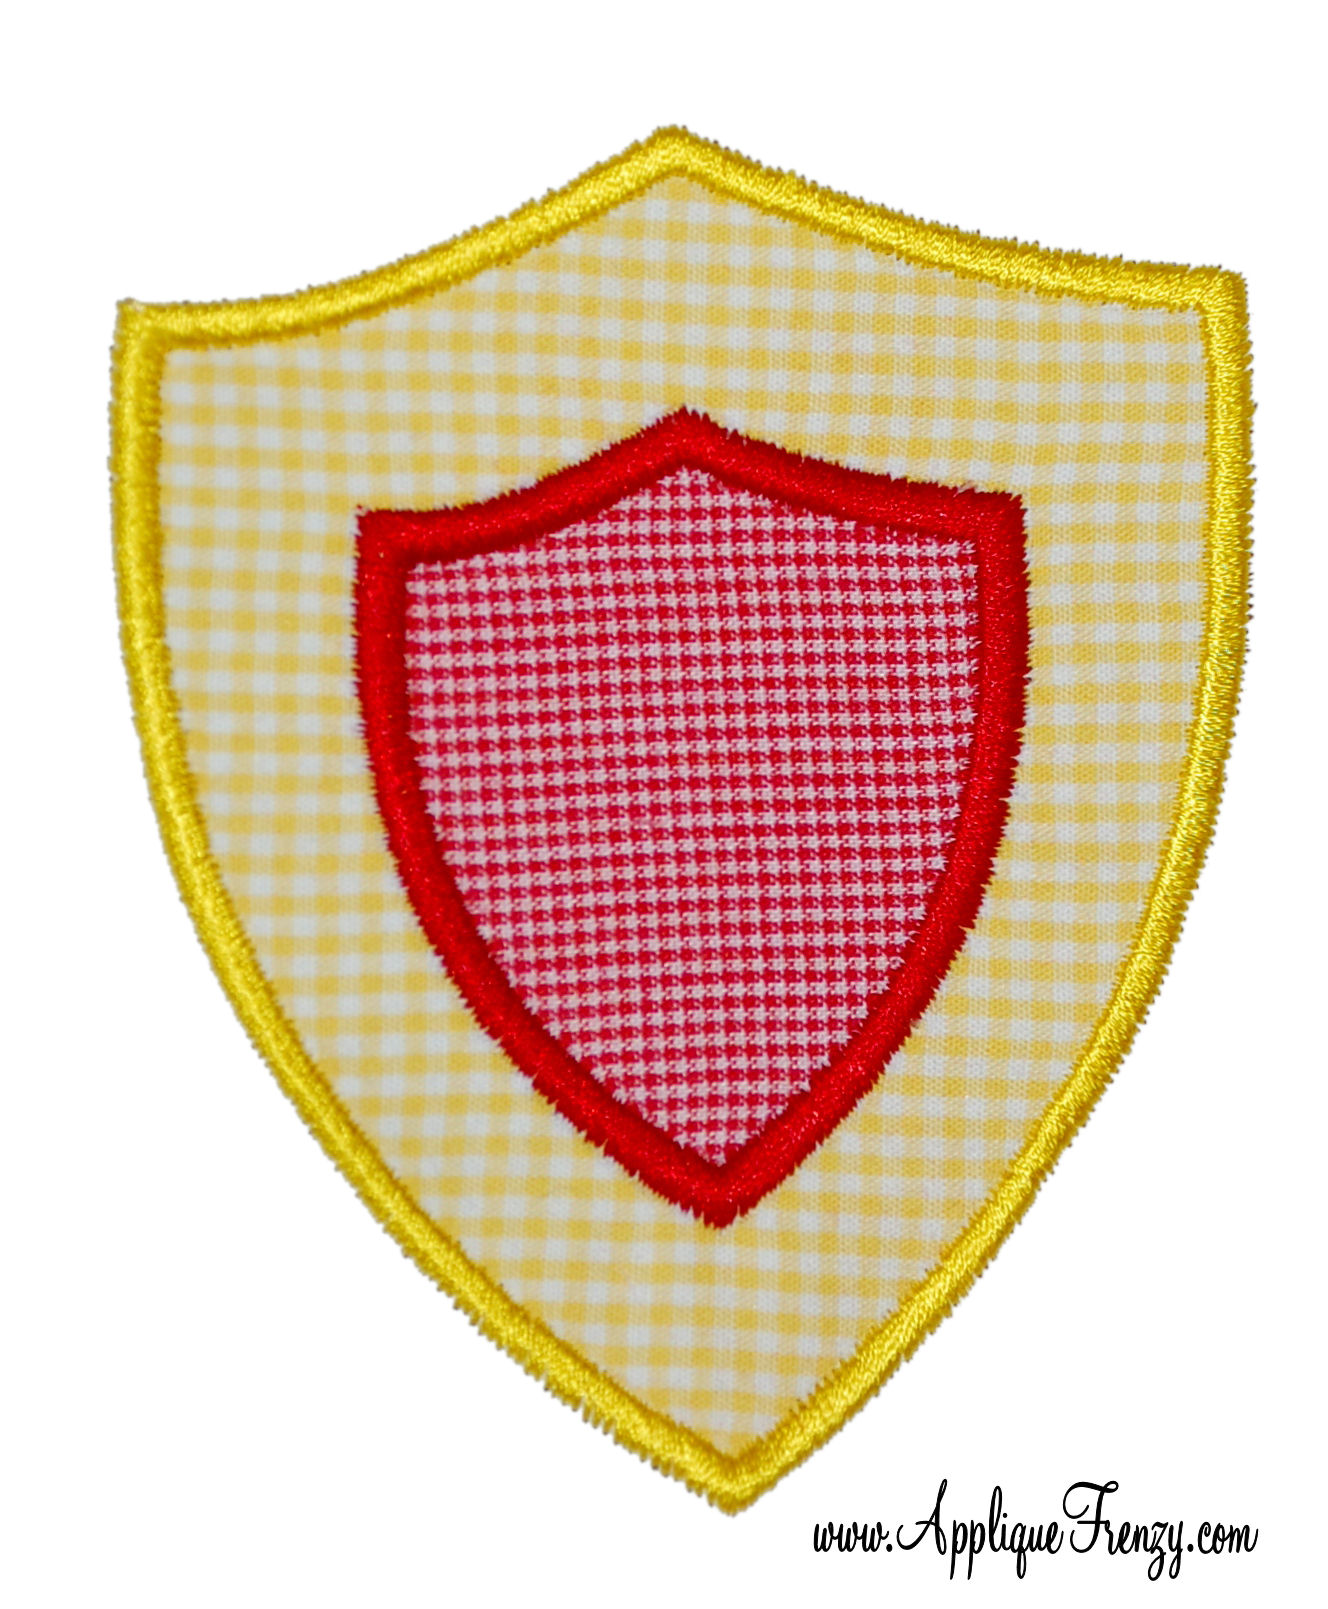 knights shield designs